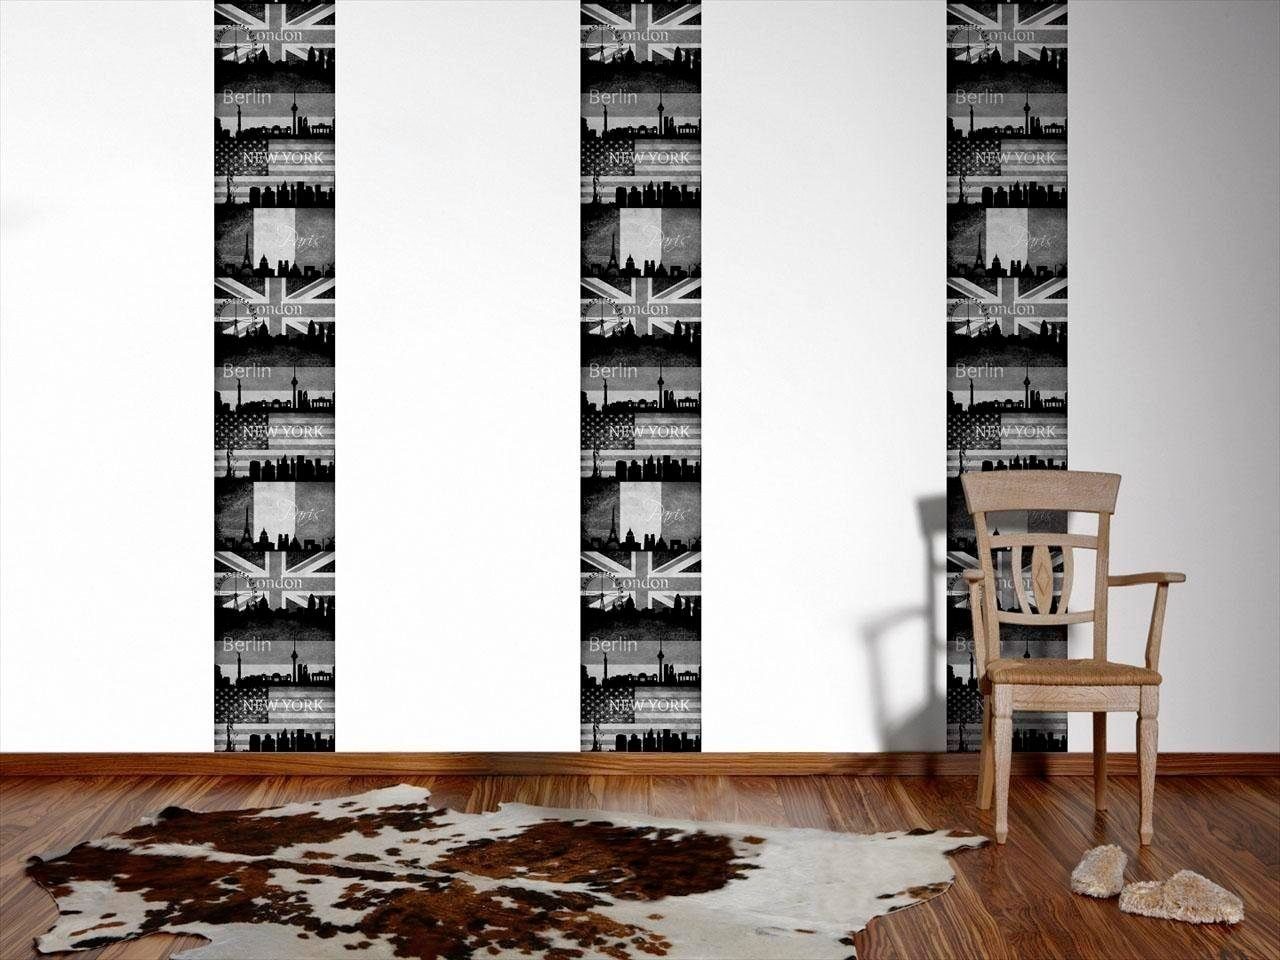 Création beige/grau/schwarz Bordüre living walls Panel, glatt, selbstklebend A.S. pop.up